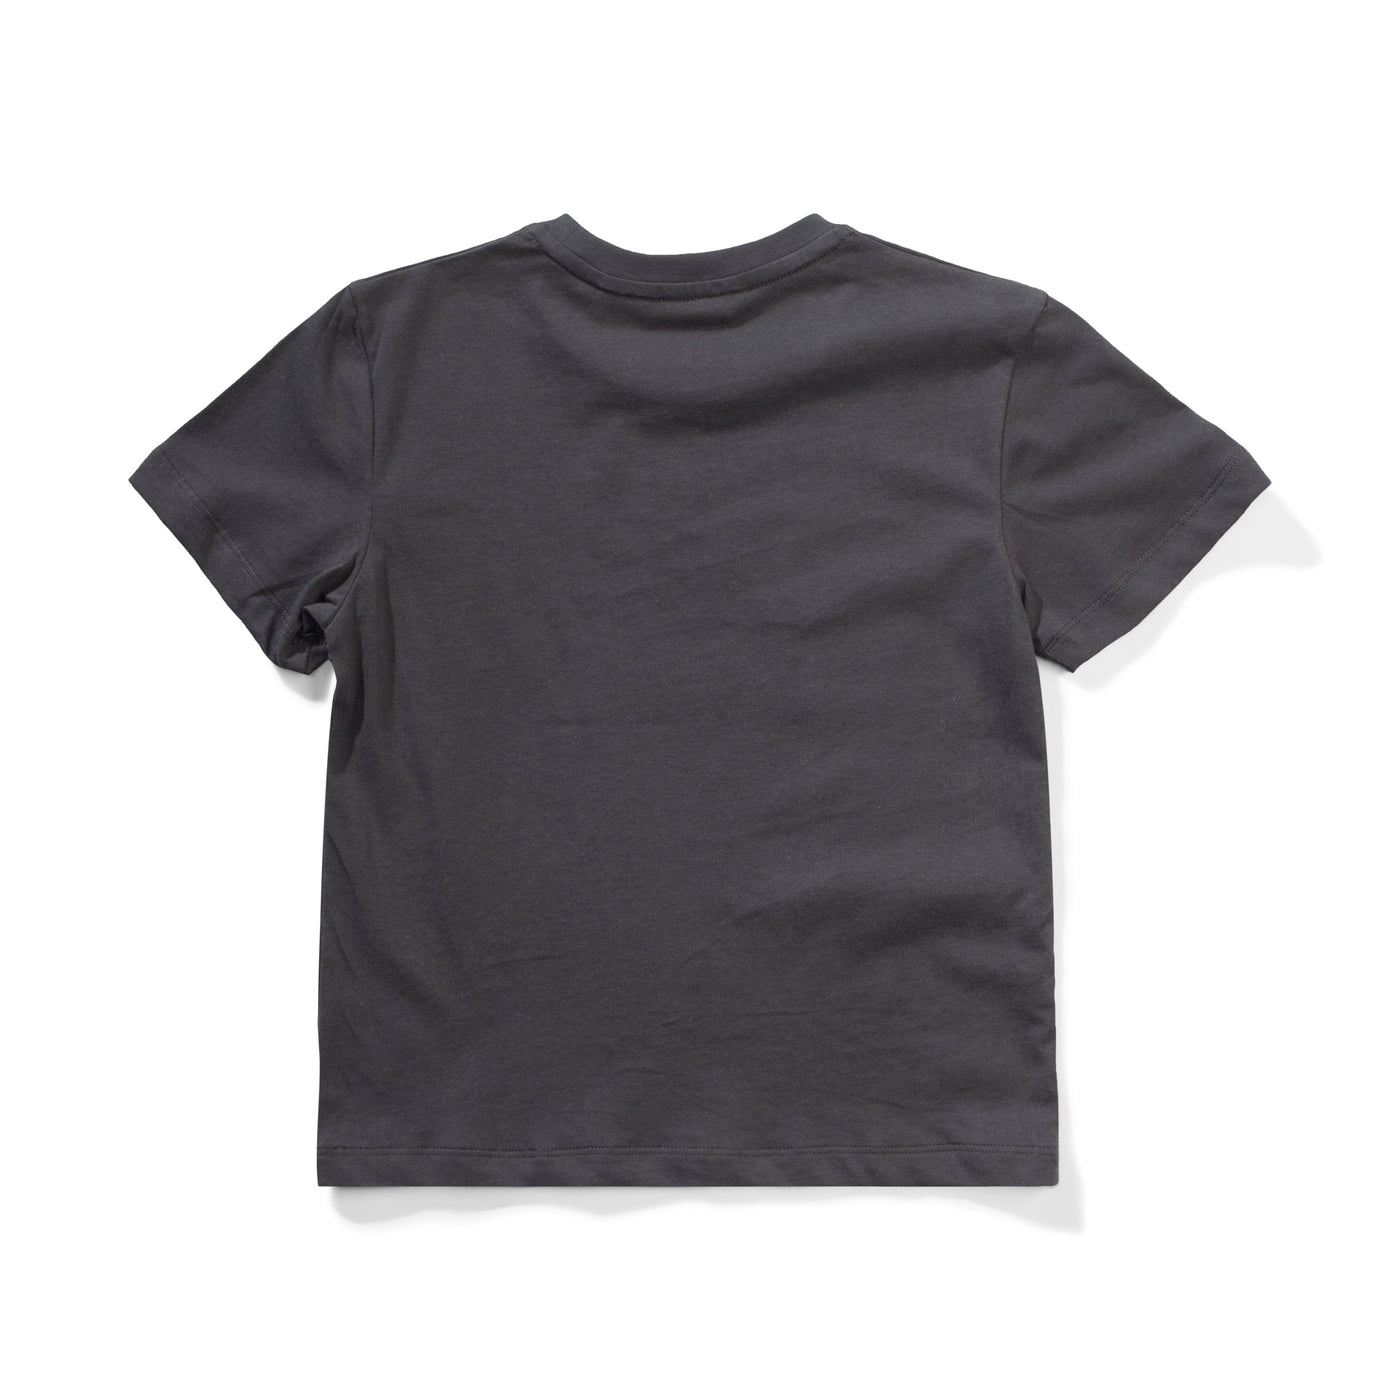 Missie Munster Ocean Lover Tee - Soft Black Short Sleeve T-Shirt Missie Munster 